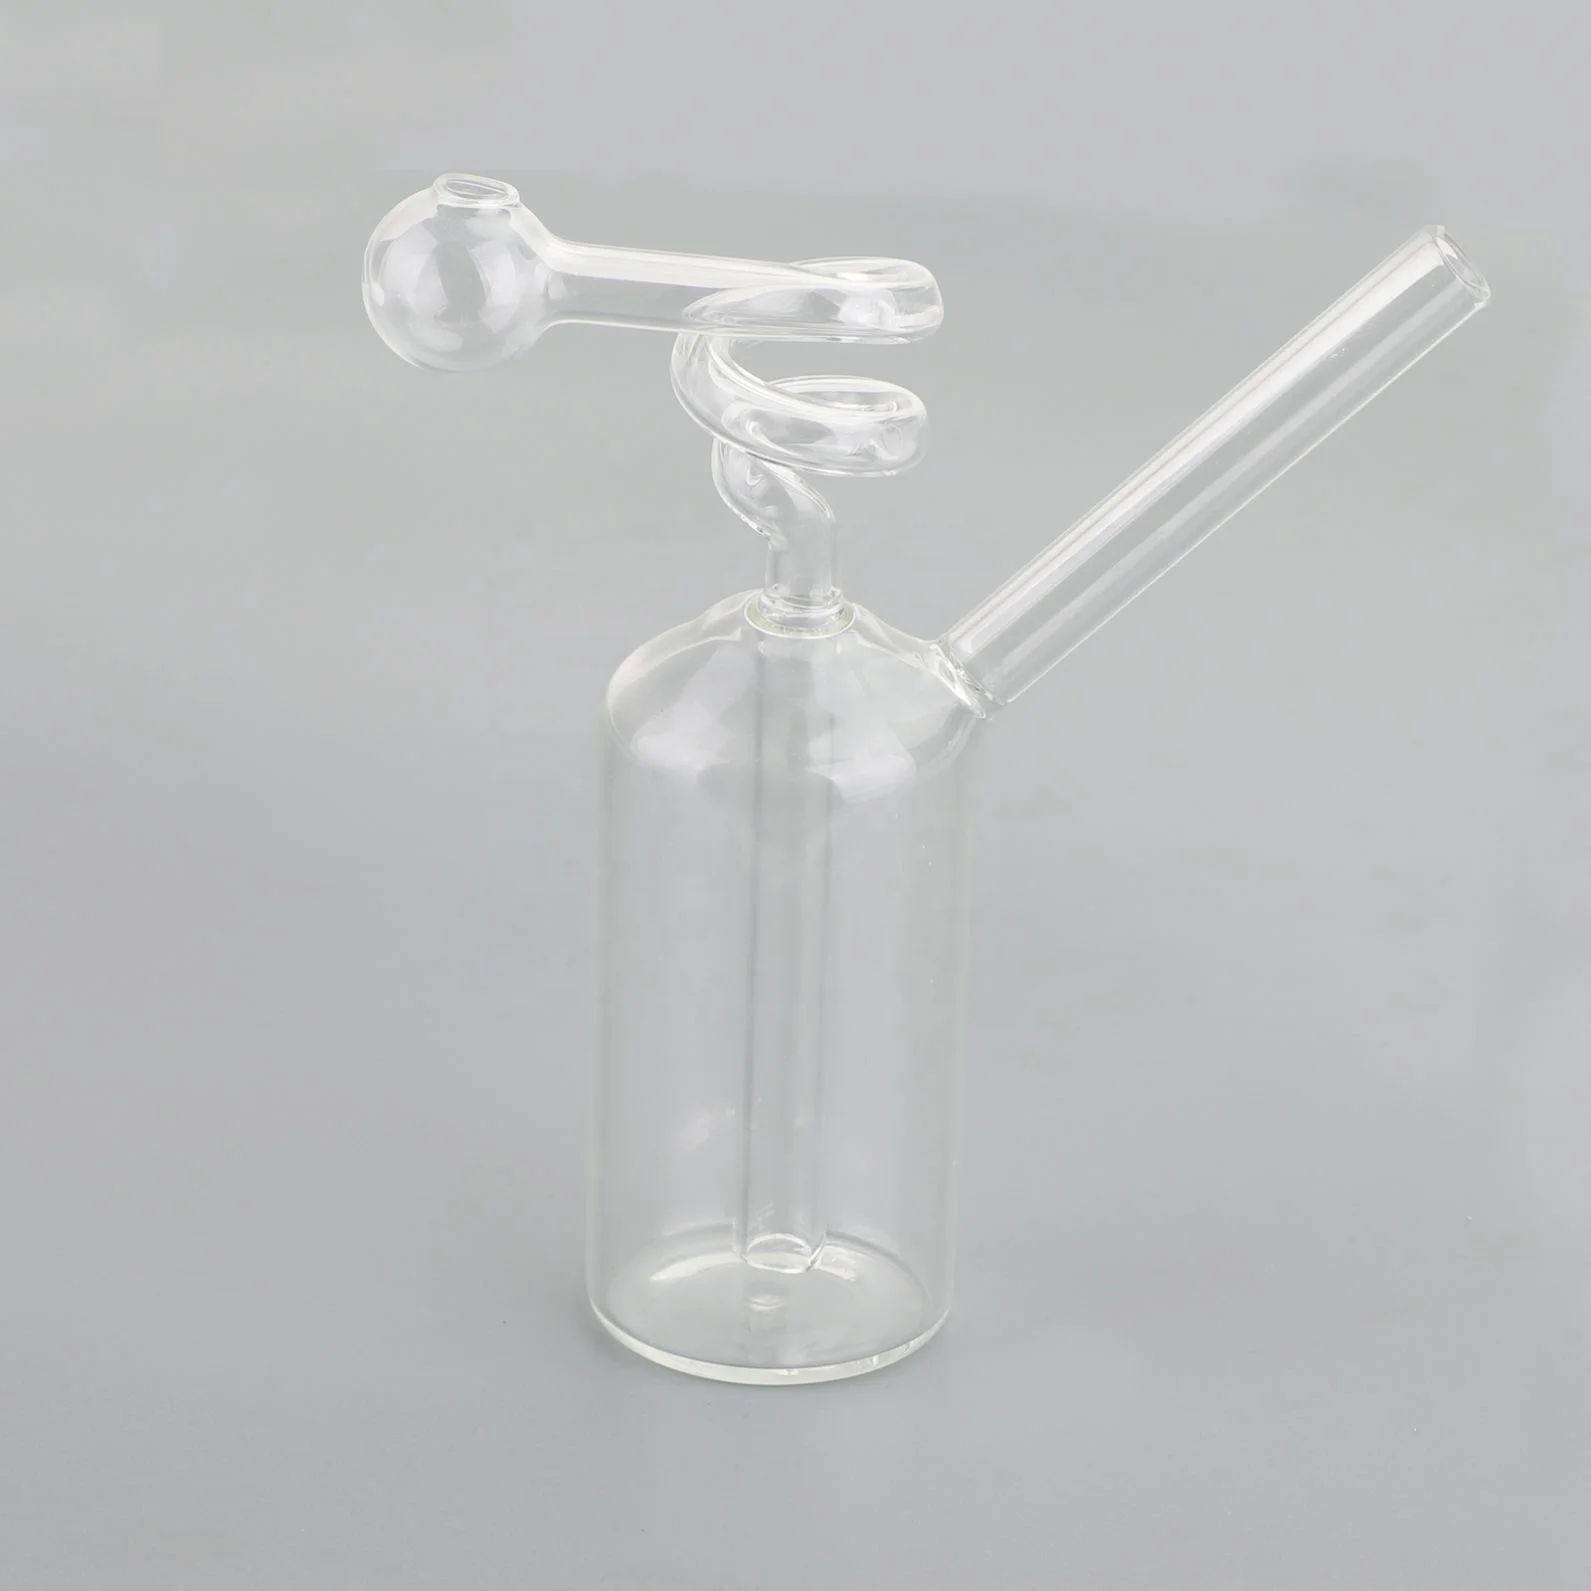 

12Cm Water Smoking Pipe Shisha Tobacco Smoke Bowl Bottle Glass Hookah, Clear